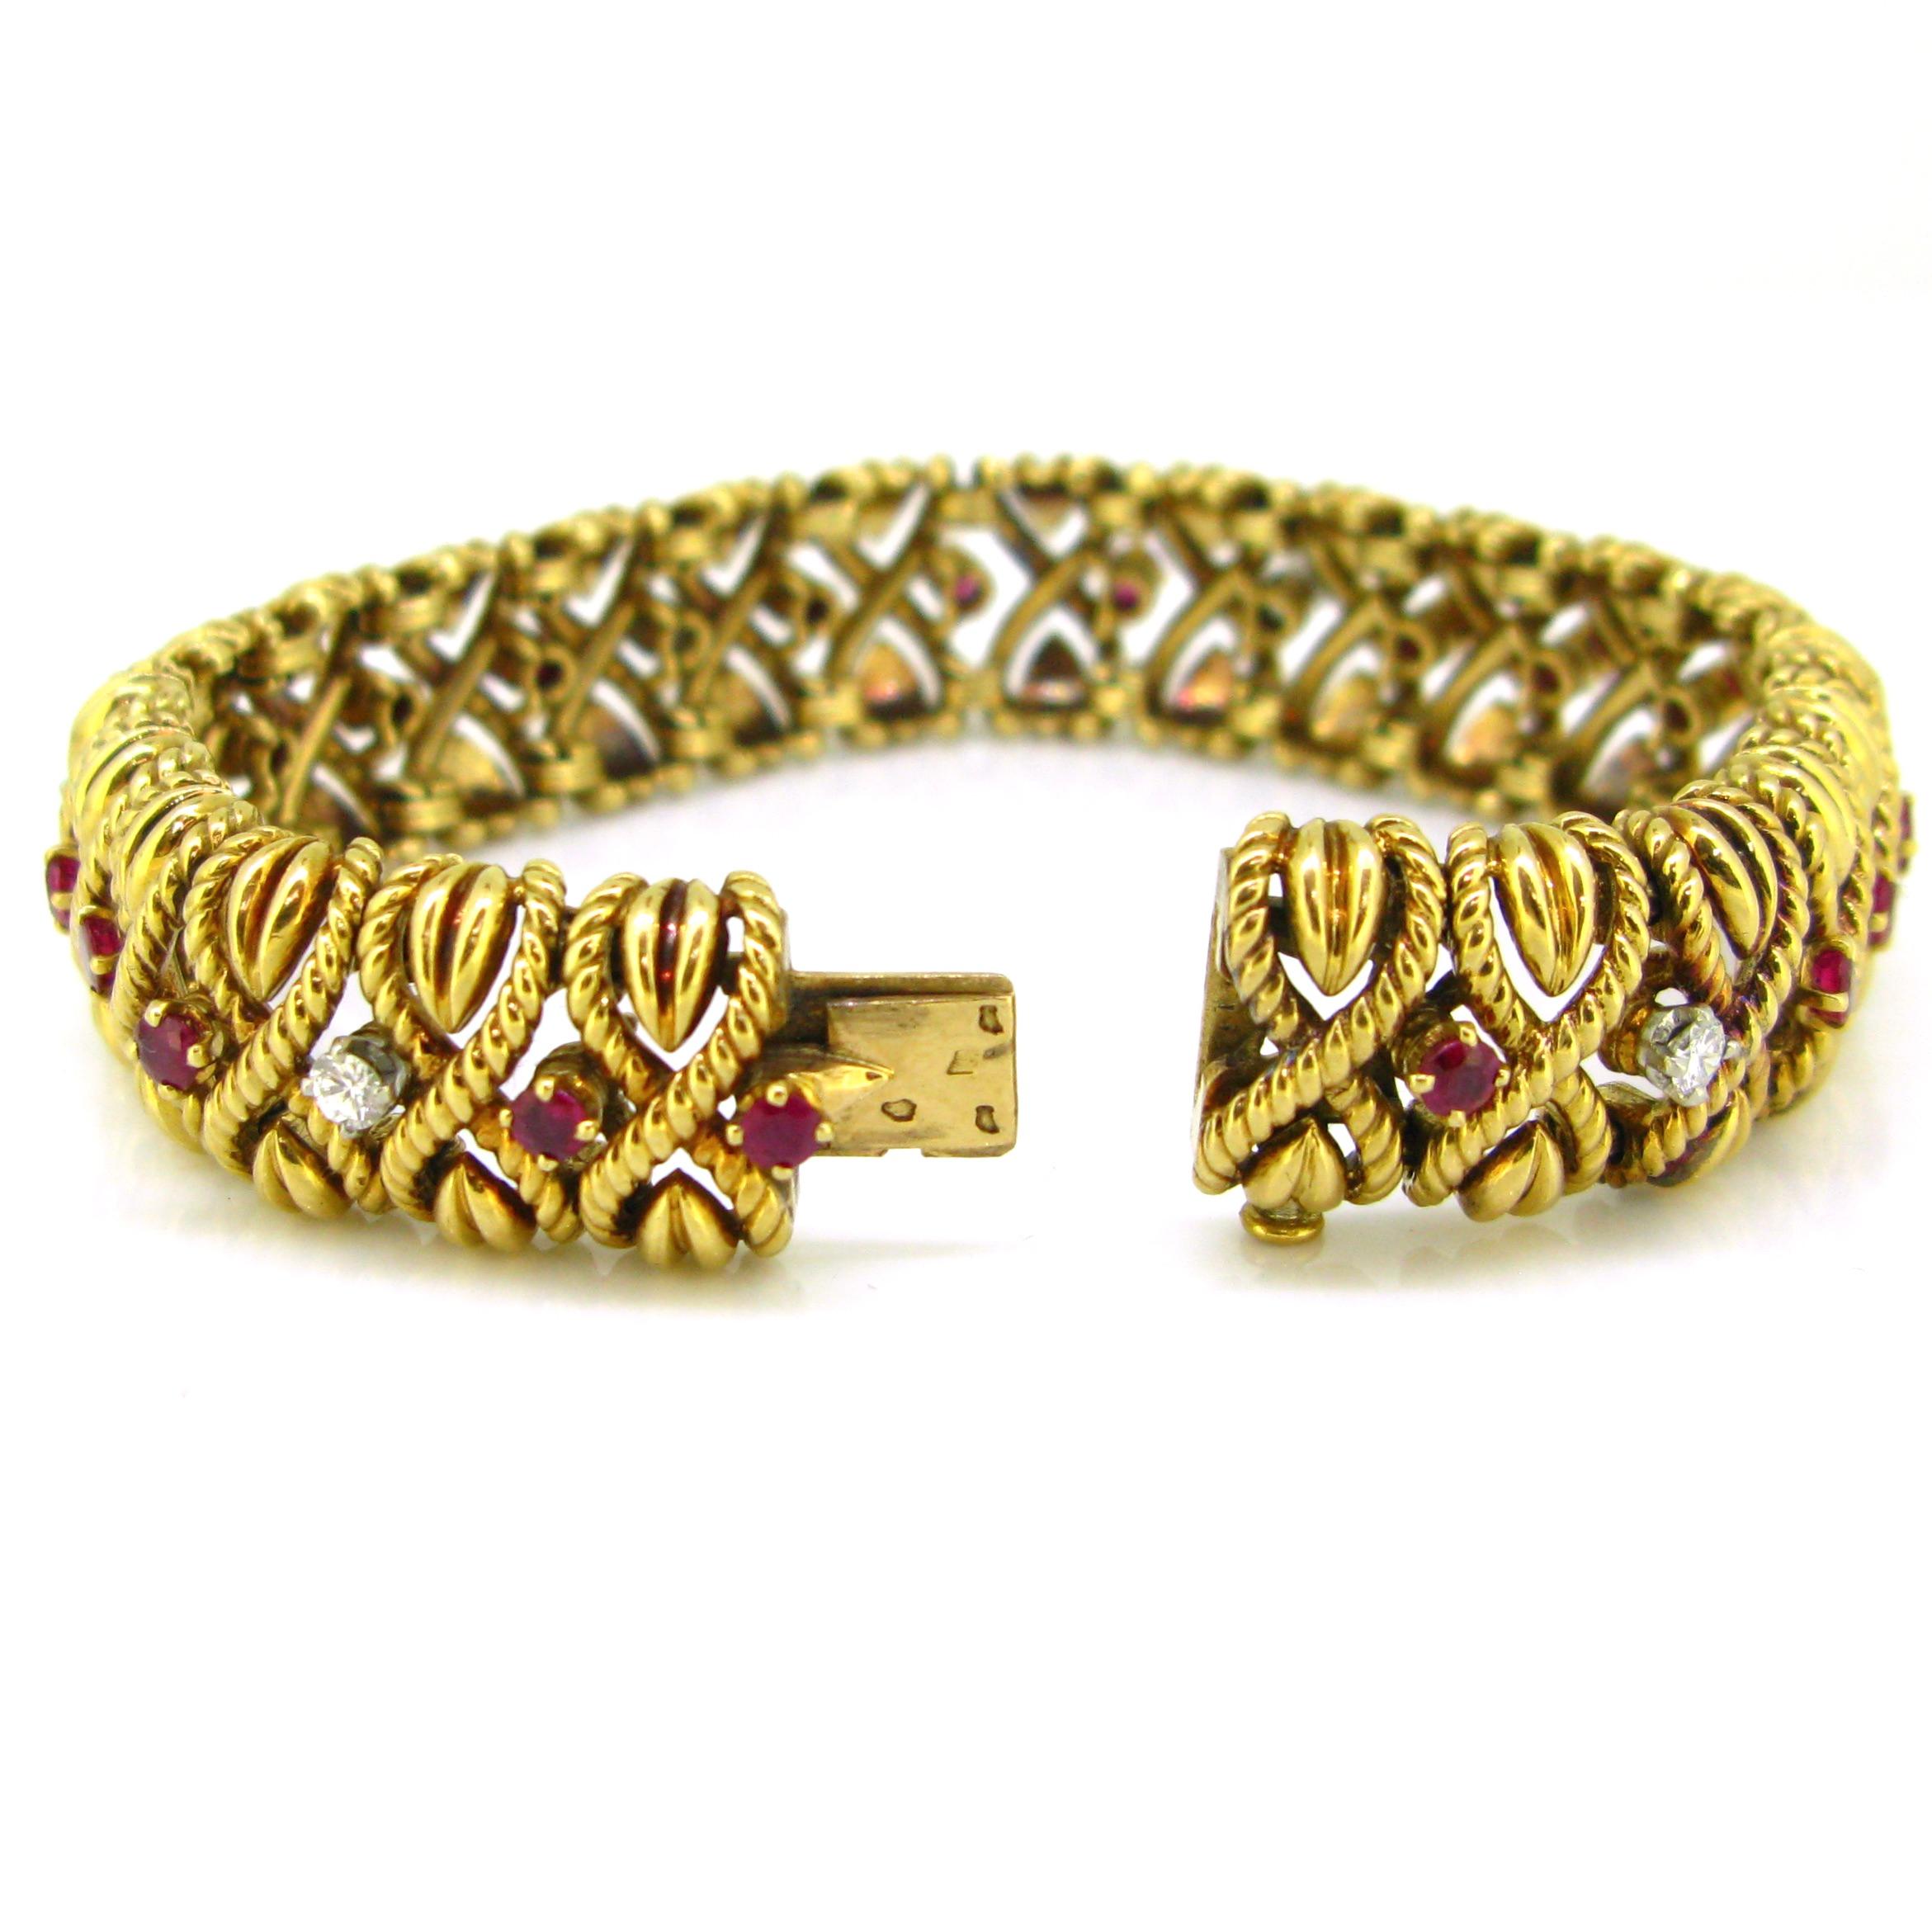 Round Cut Vintage Ruby and Diamonds Gold Bracelet by André Vassort for Van Cleef & Arpels For Sale